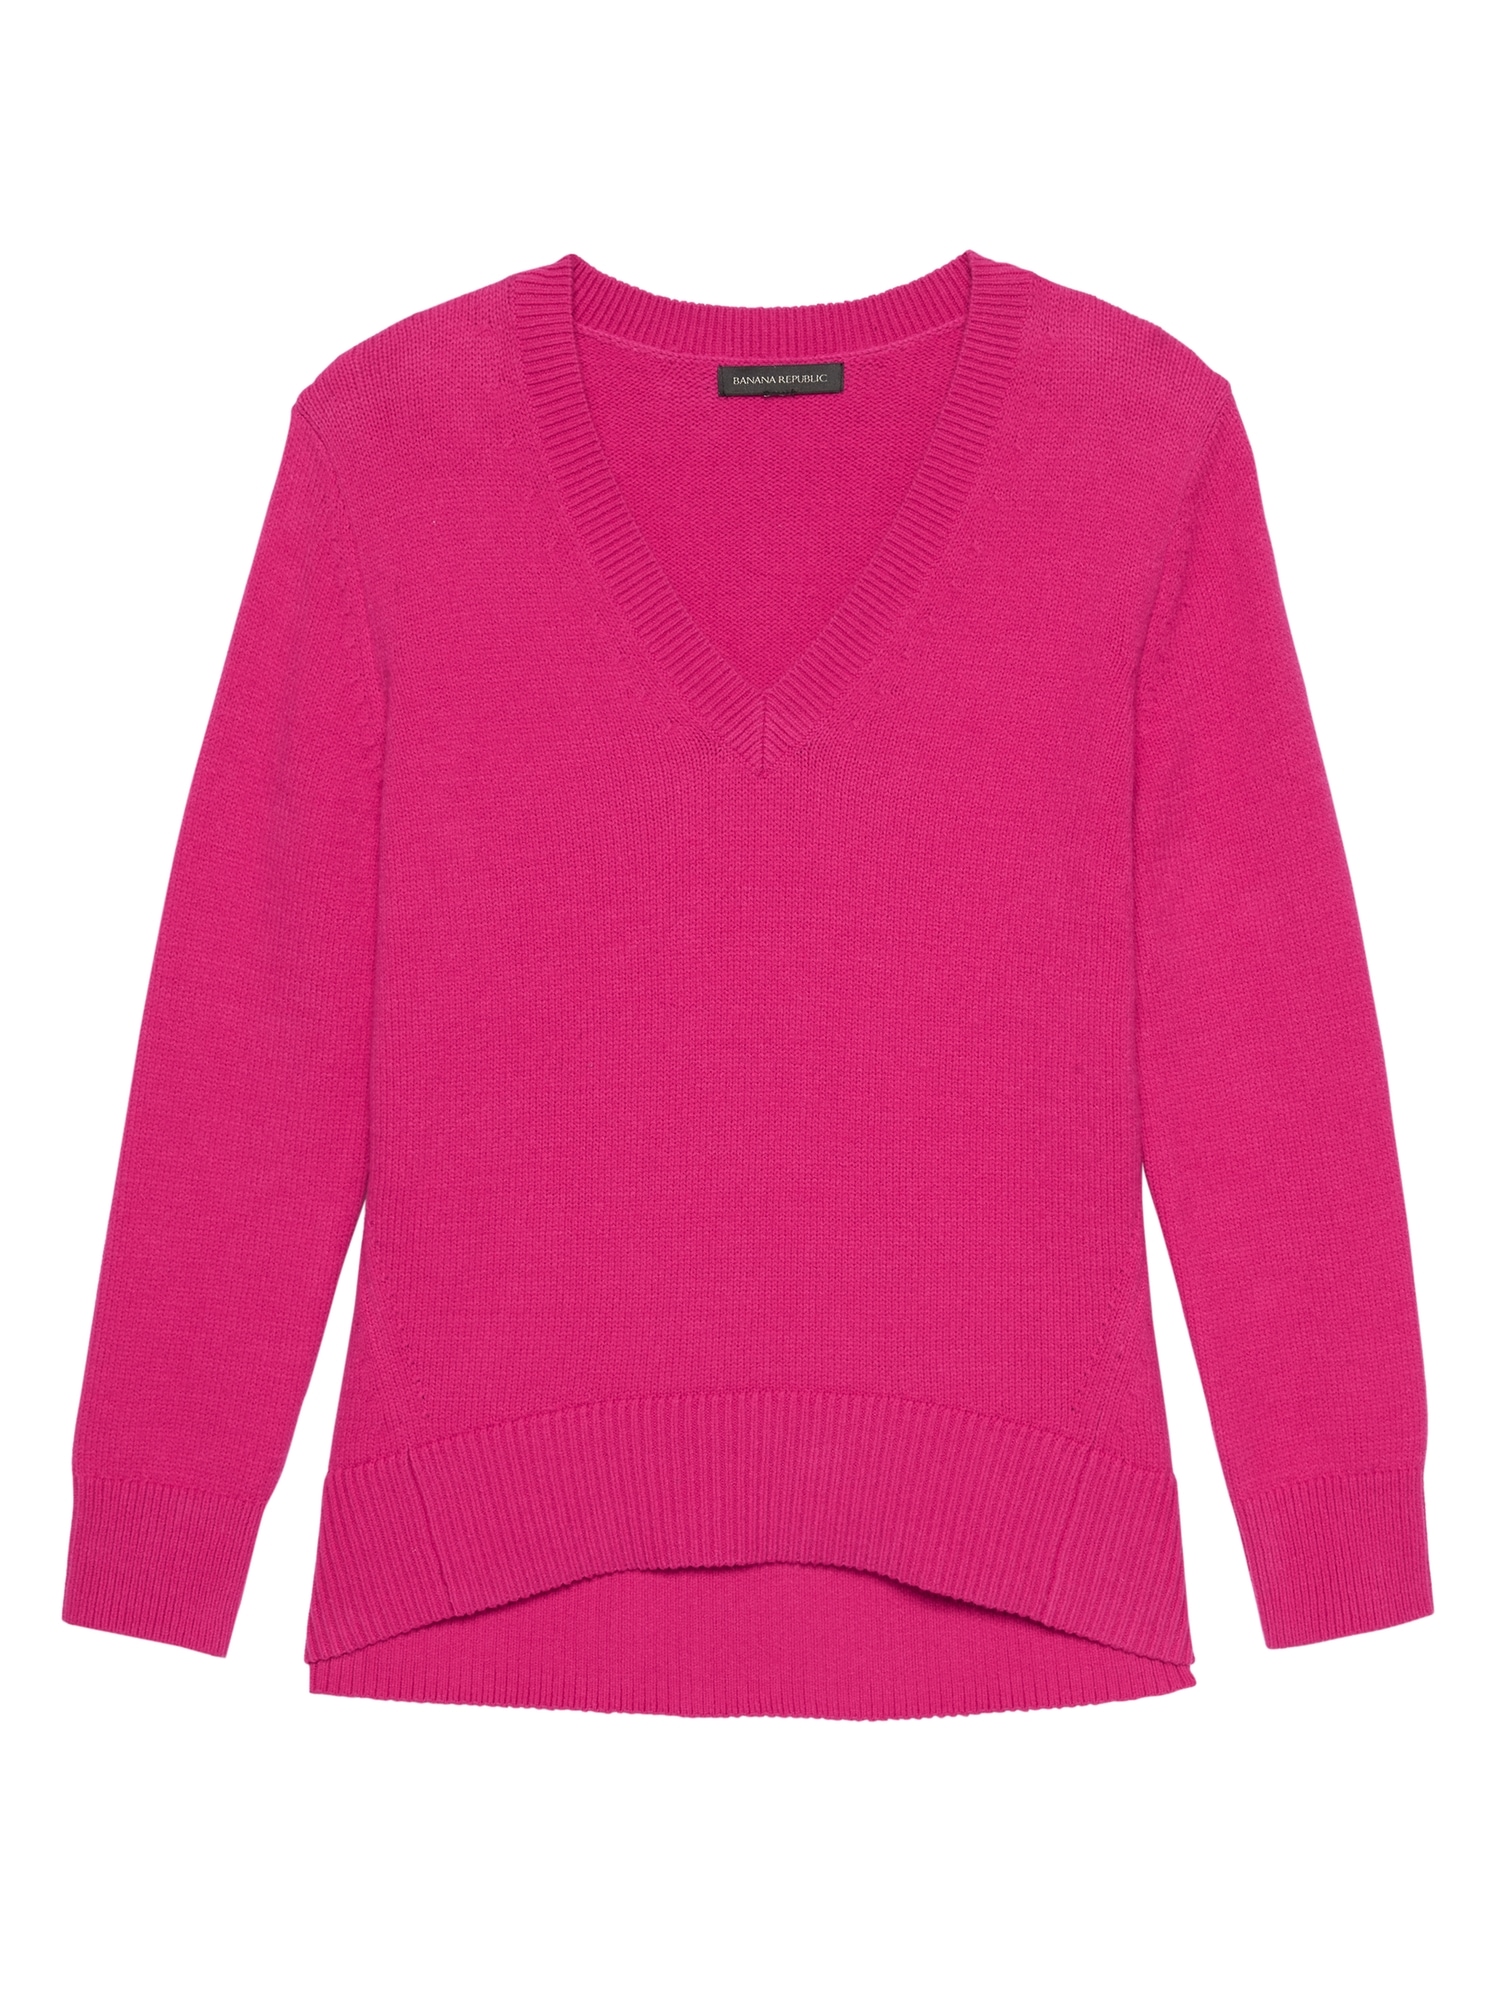 Petite Supersoft Cotton Blend Boyfriend V-Neck Sweater